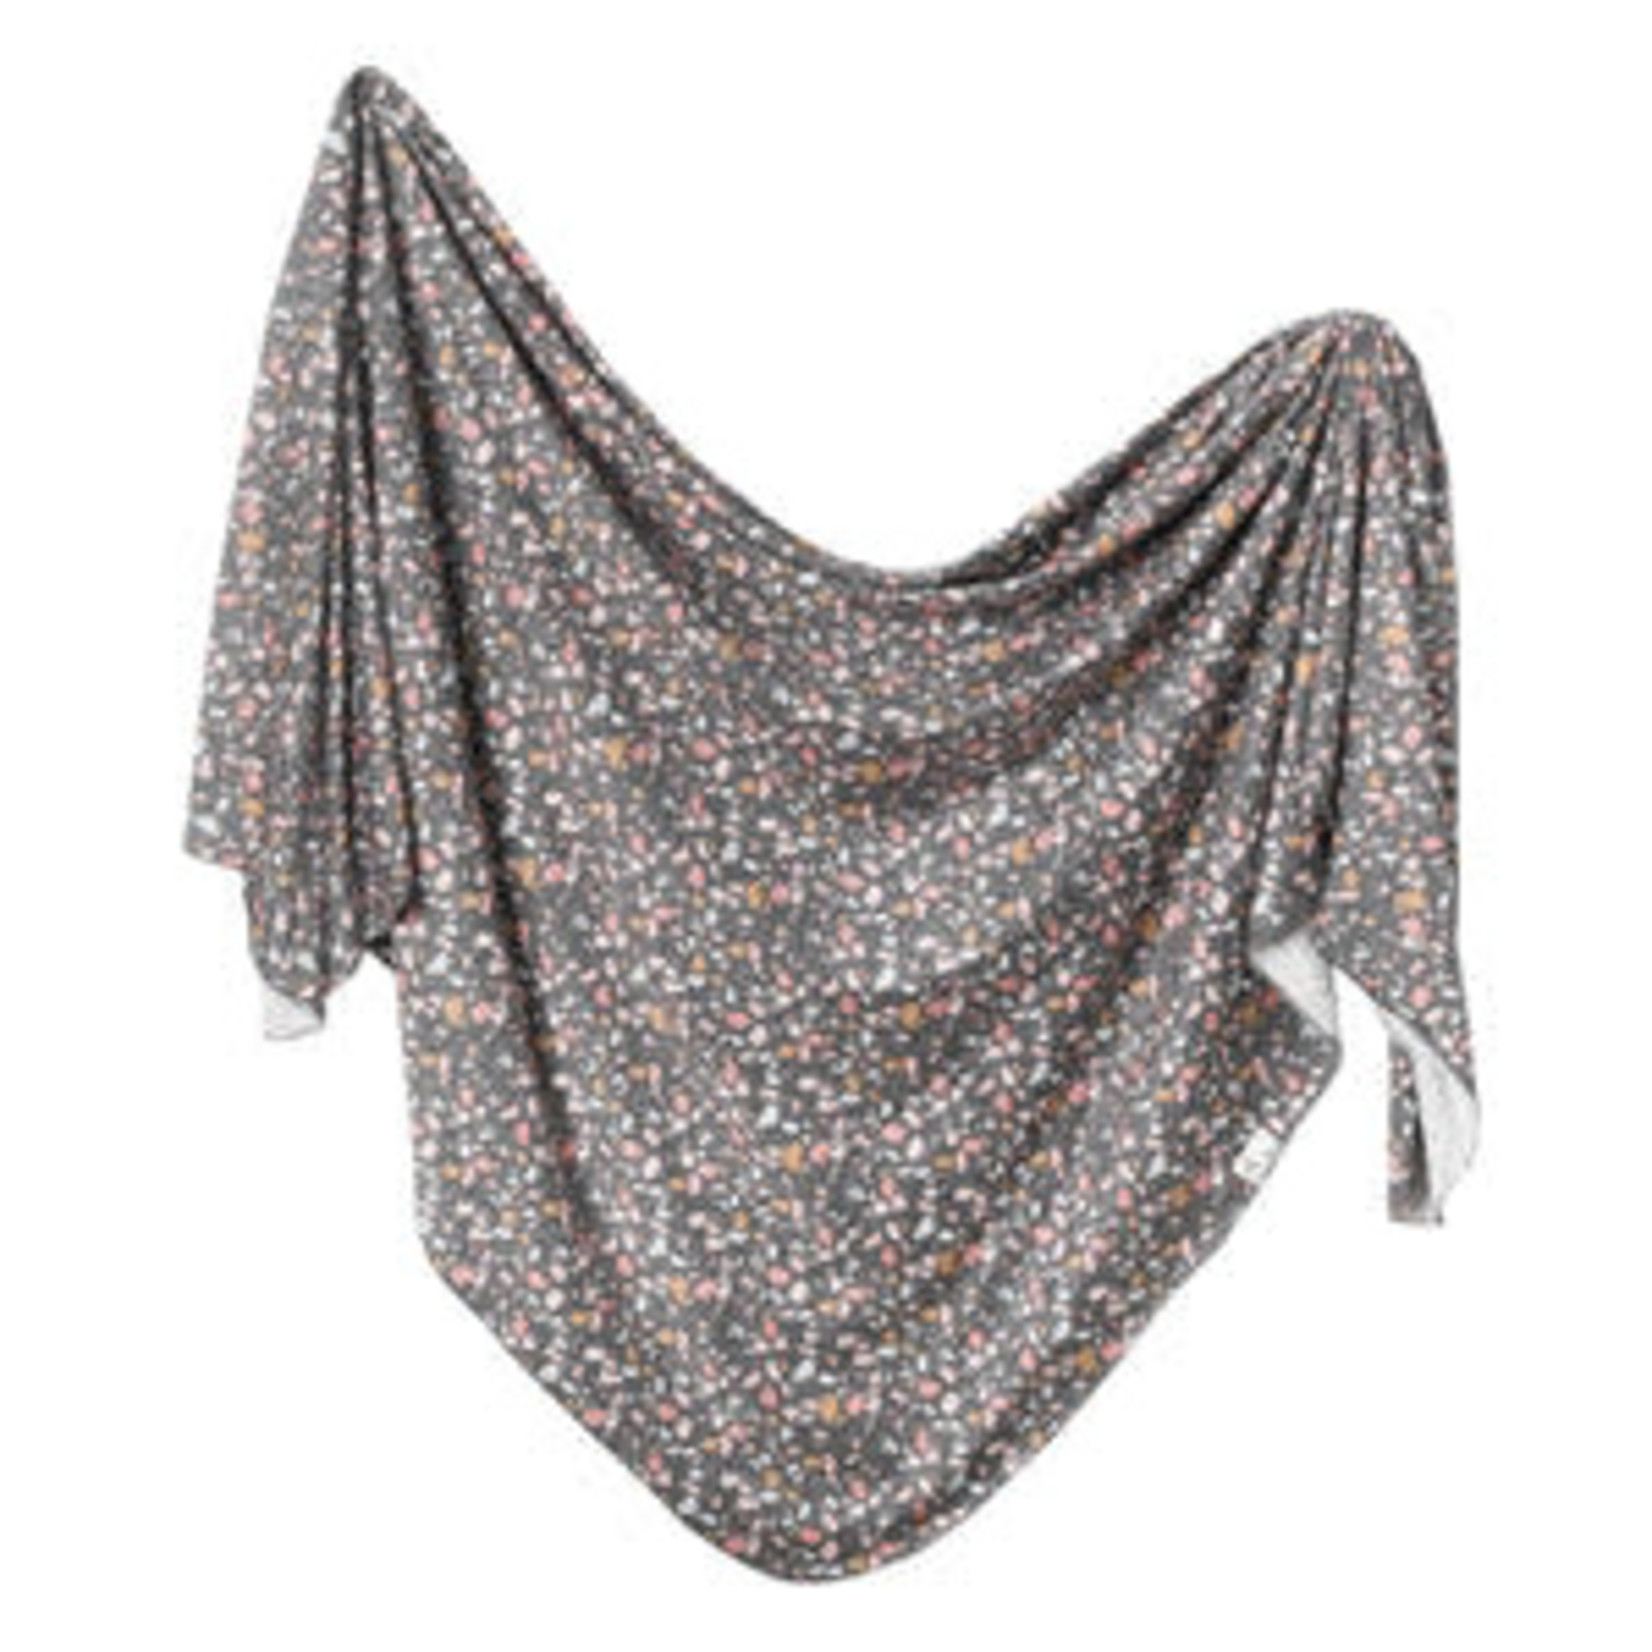 Copper Pearl Knit Blanket - Gemini